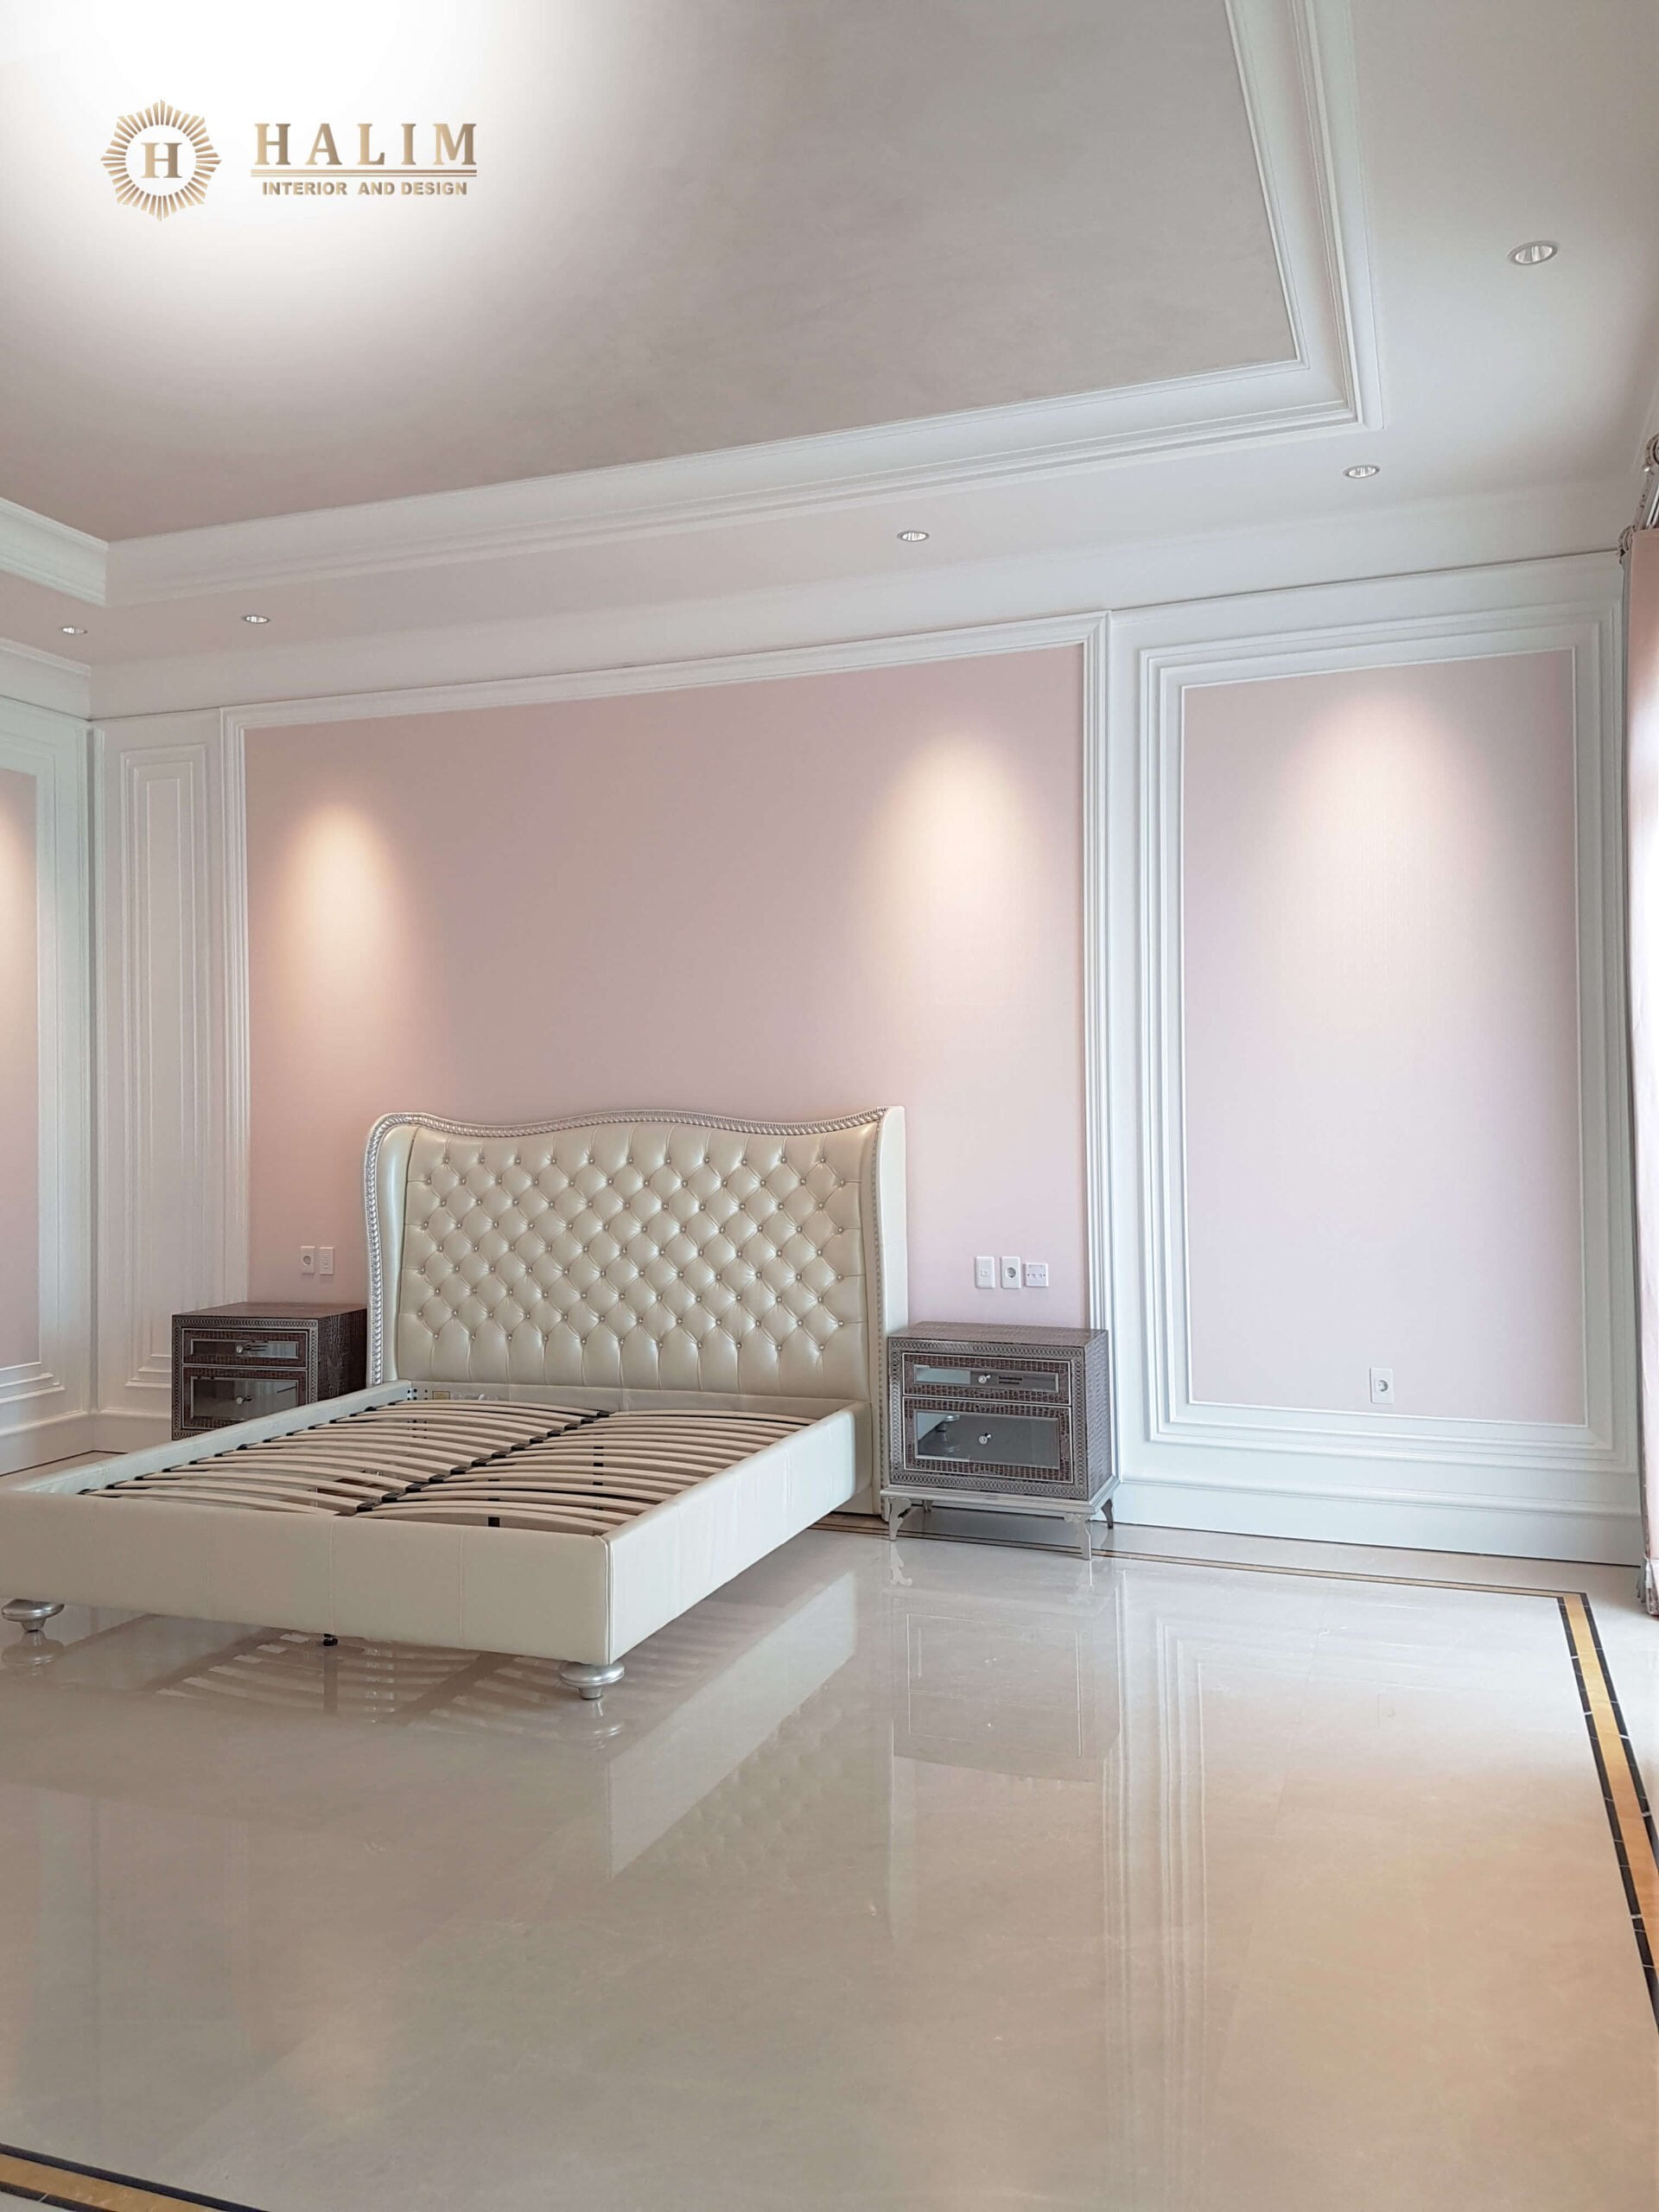 Halim Interior modern furniture contemporer american style minimalist european classic surabaya Kertajaya 8. Kamar Anak Perempuan scaled